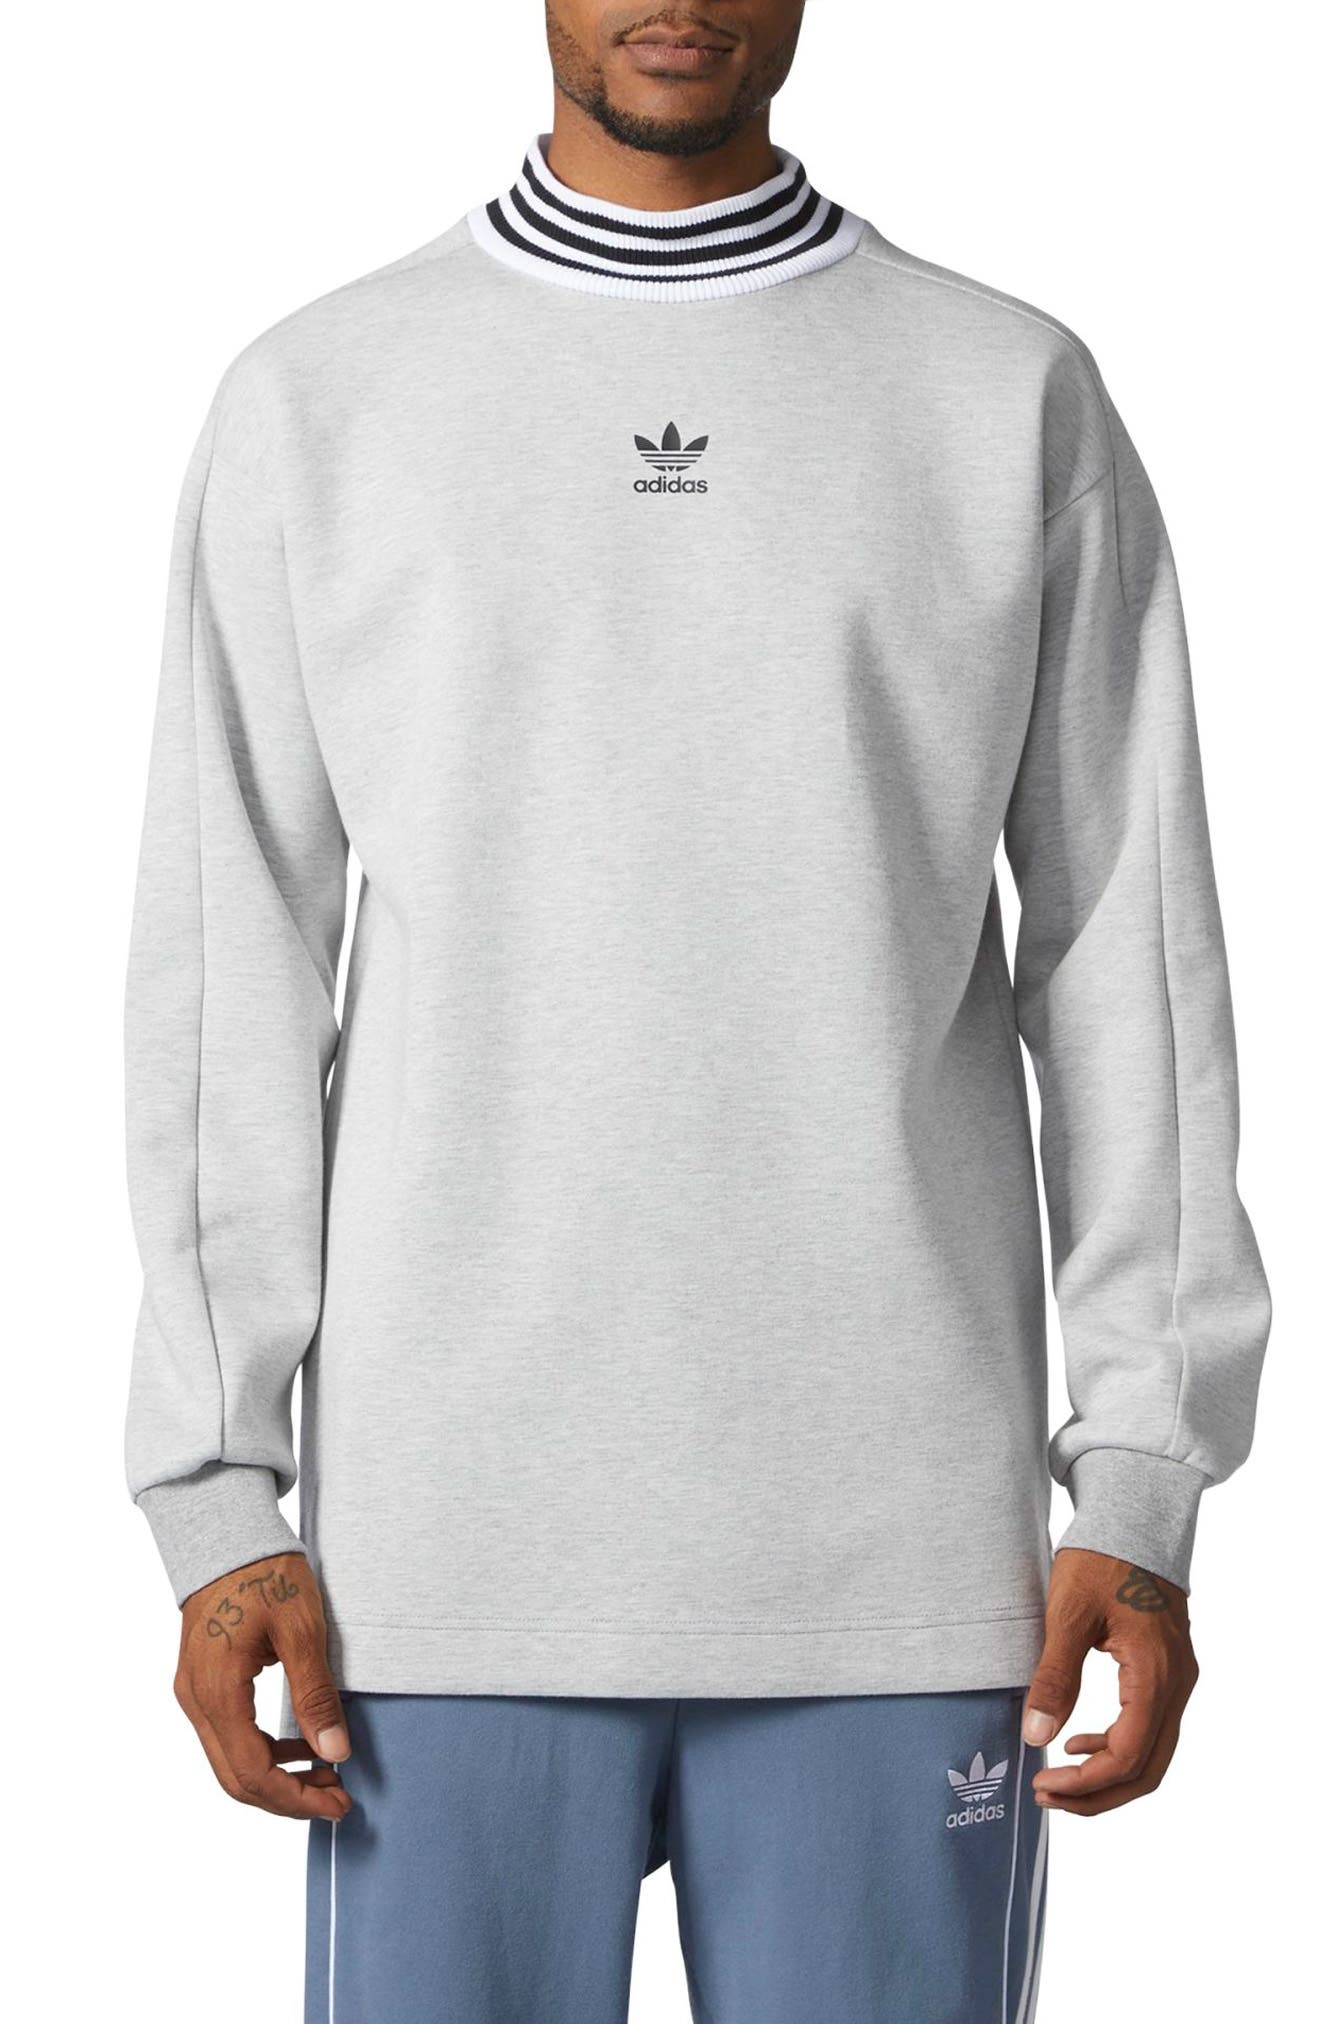 adidas longline sweatshirt